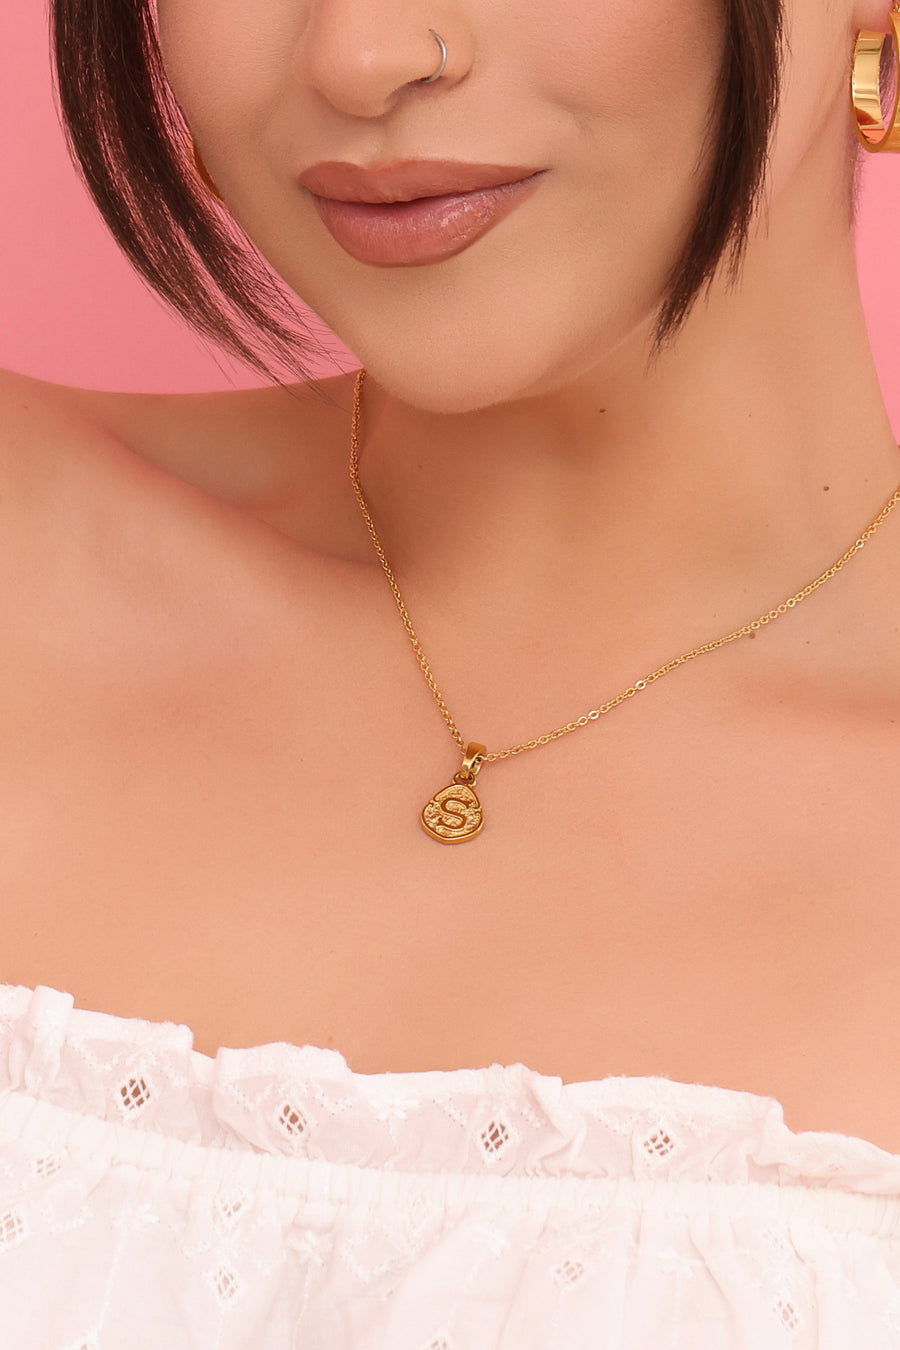 "L" Tberfil Letter Pendant with Petite Adjustable Chain Necklace